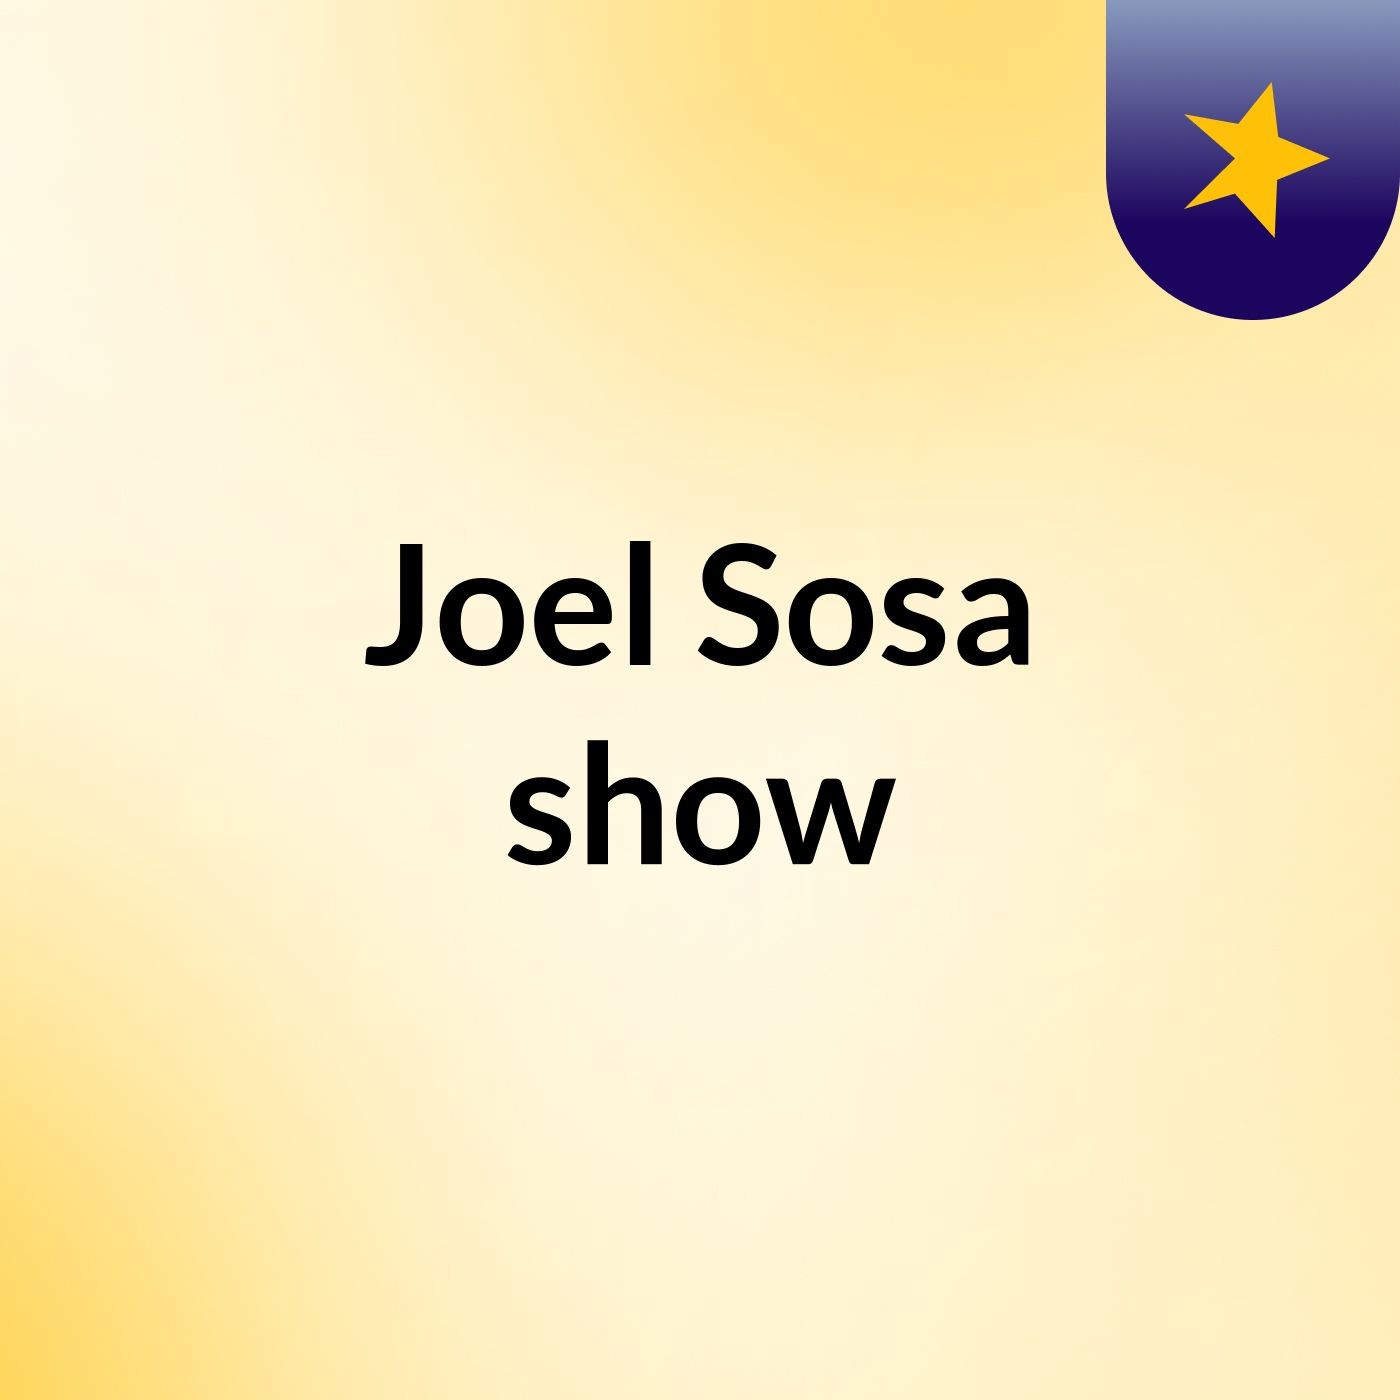 Joel Sosa show